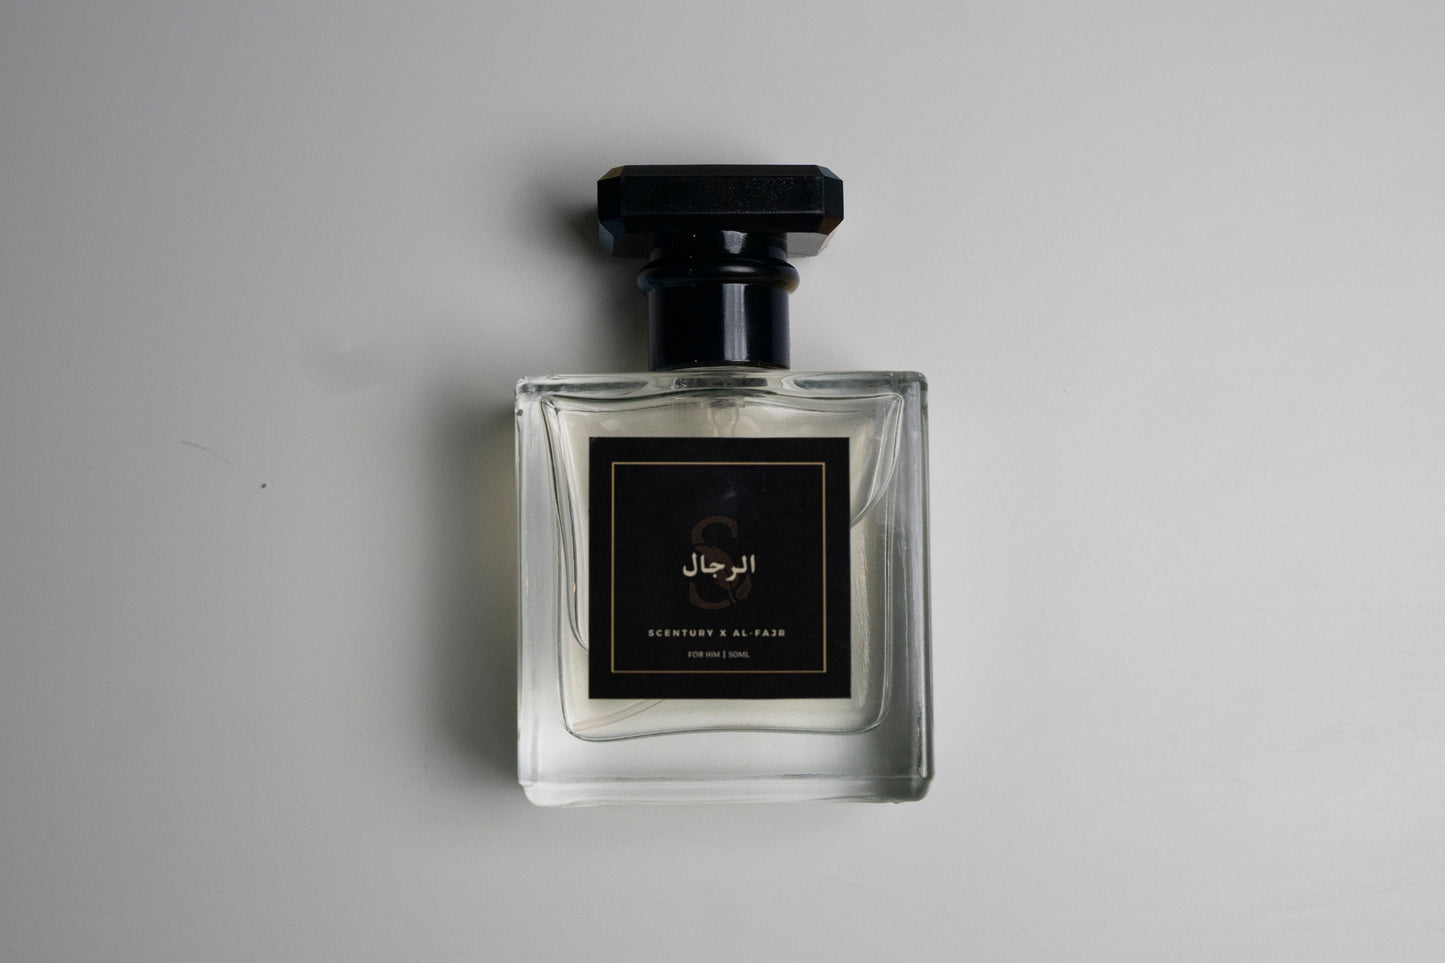 Arrijal (Men's Perfume)